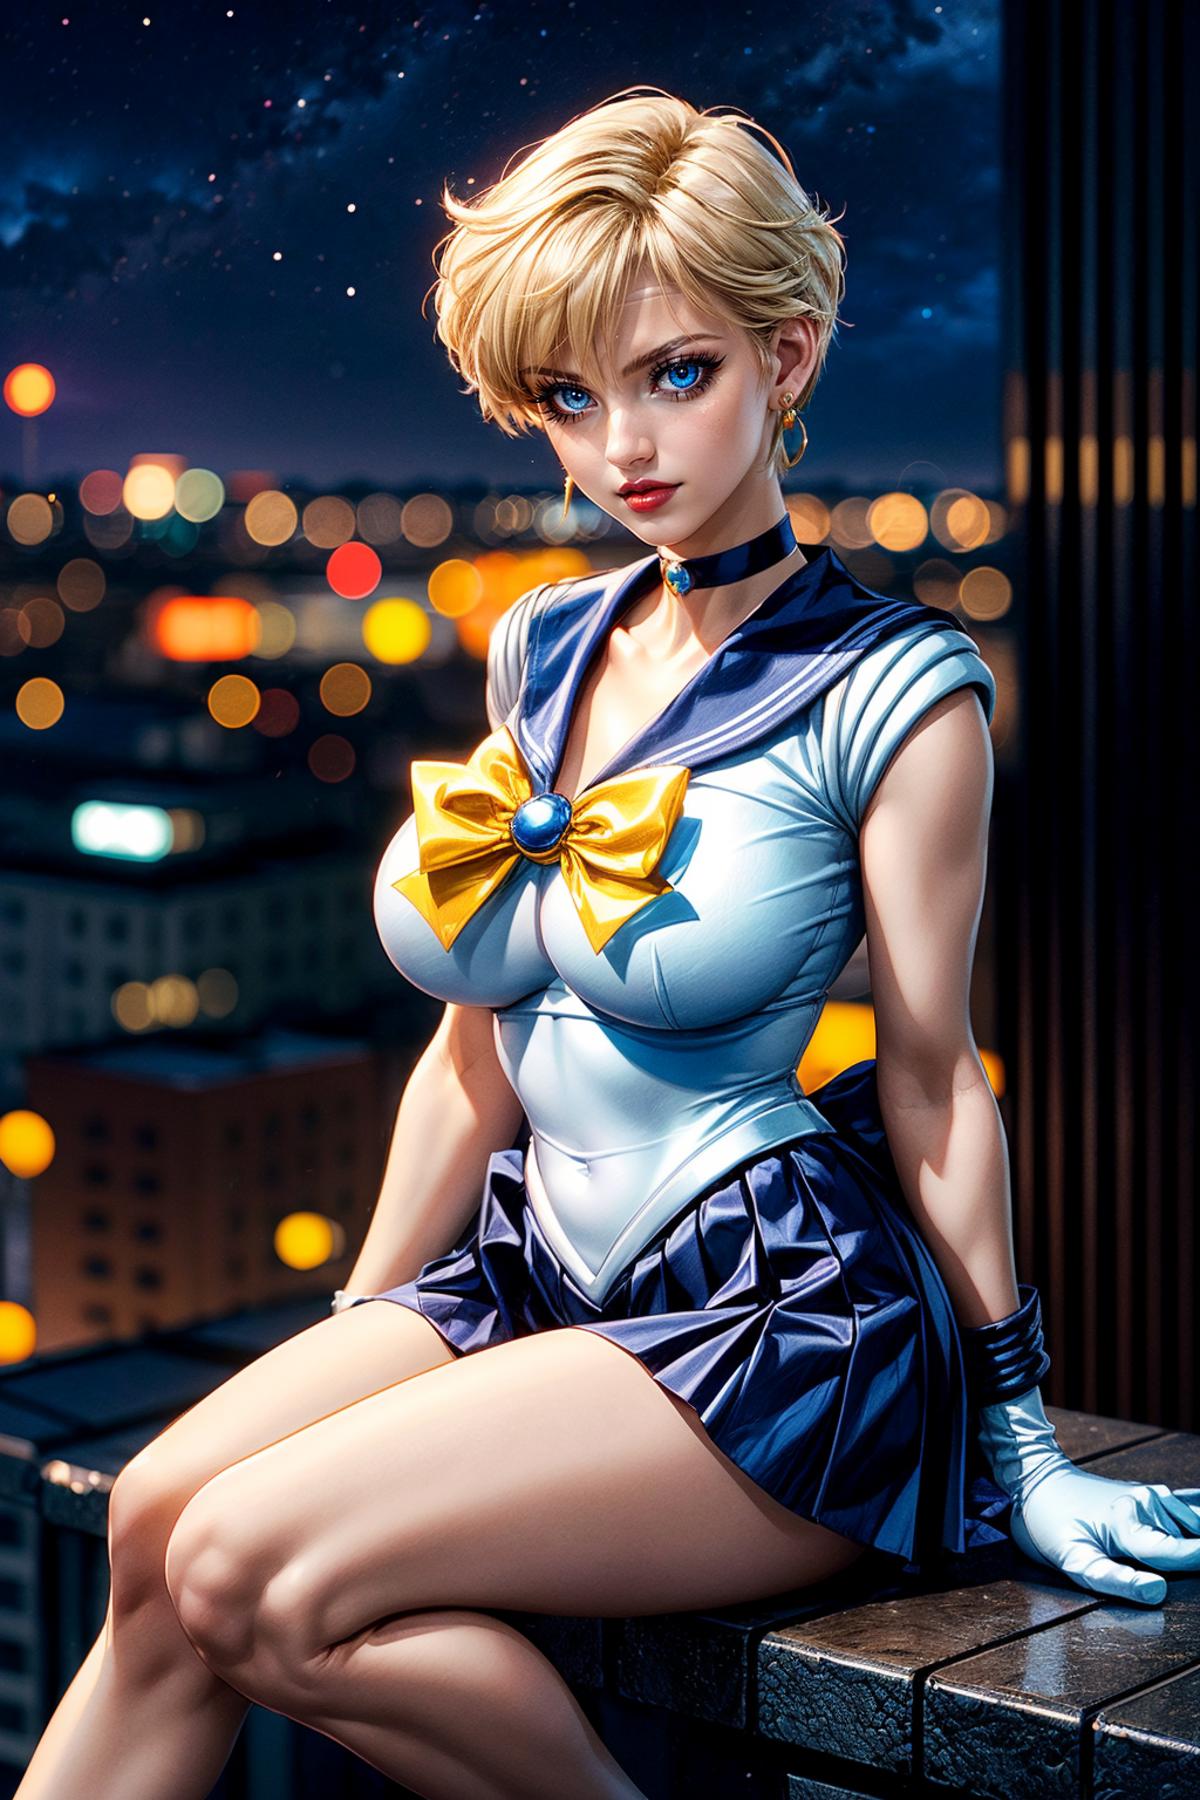 Sailor Uranus / Haruka Tenoh (Sailor Moon) - Lora image by iJWiTGS8